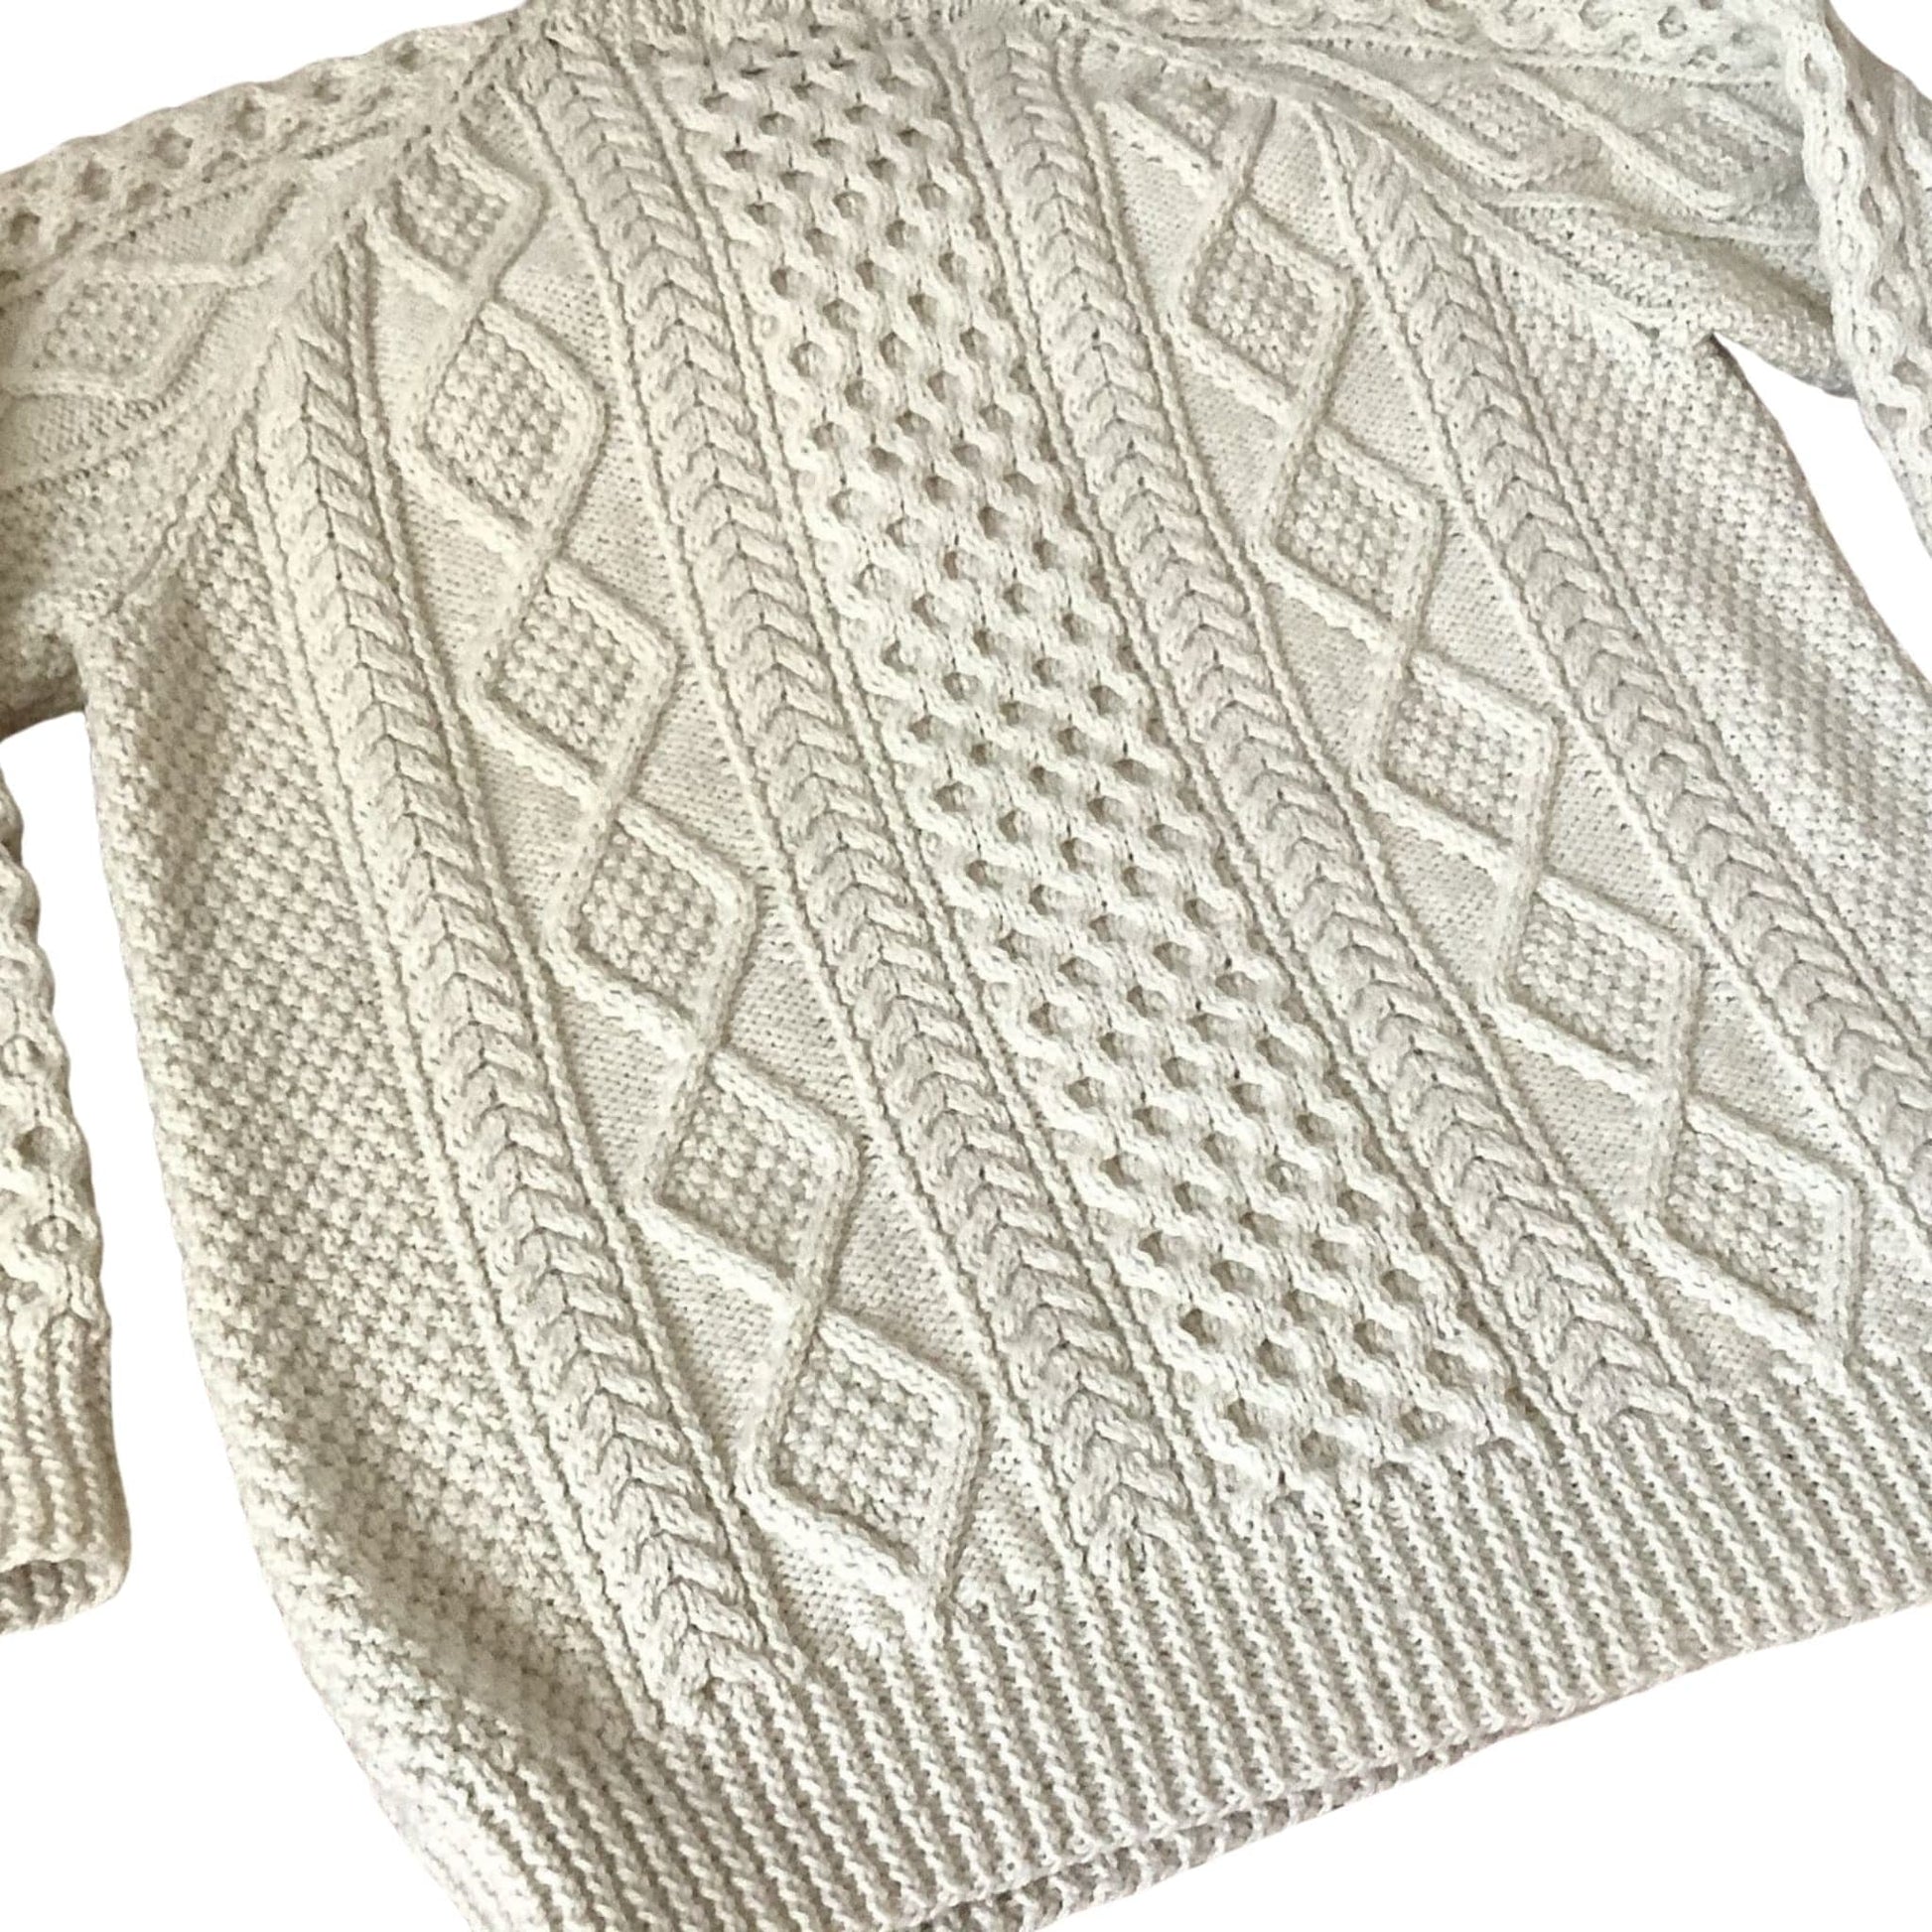 John Molloy Wool Sweater Medium / Beige / Vintage 1990s